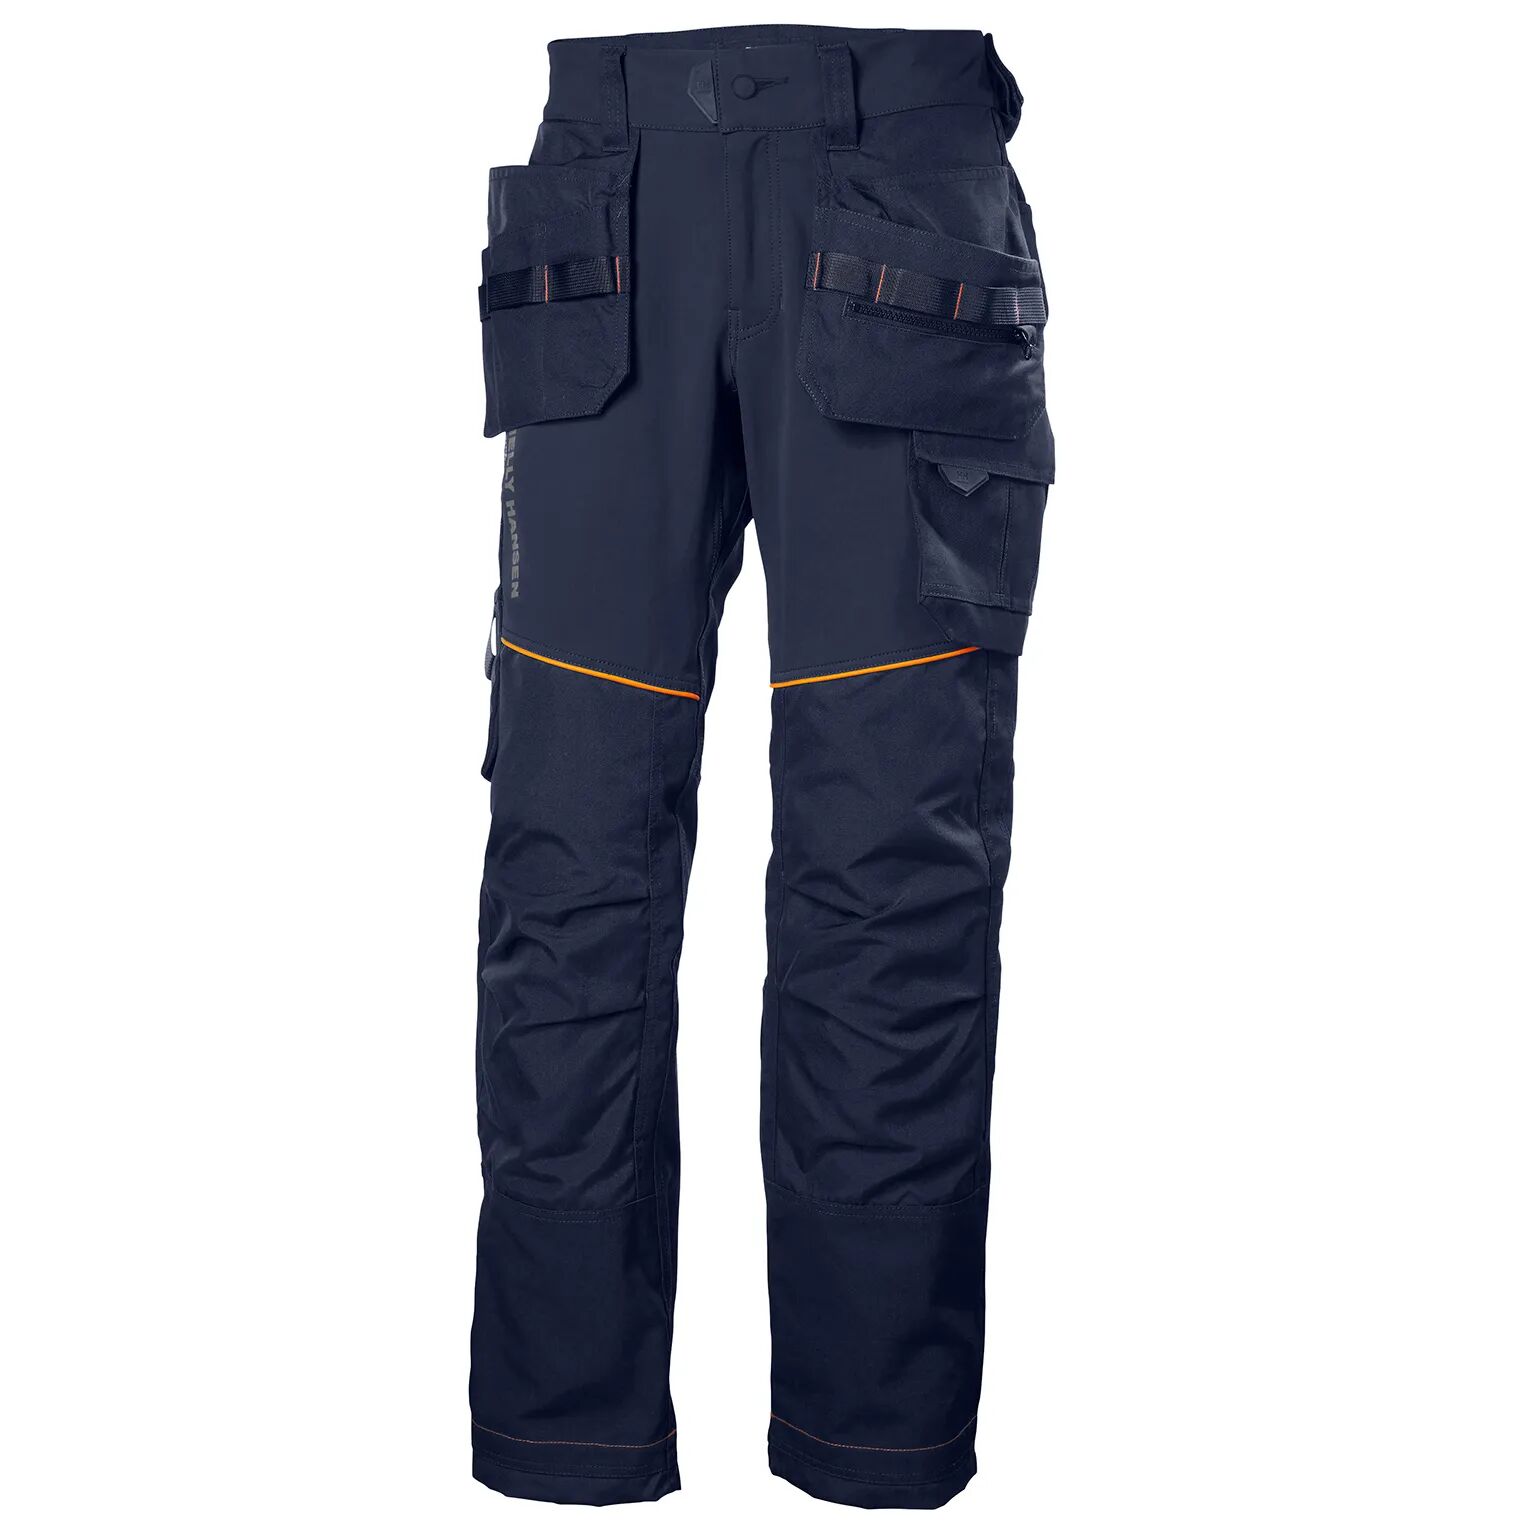 HH Workwear Helly Hansen WorkwearChelsea Evolution Construction Pants Navy 32/34